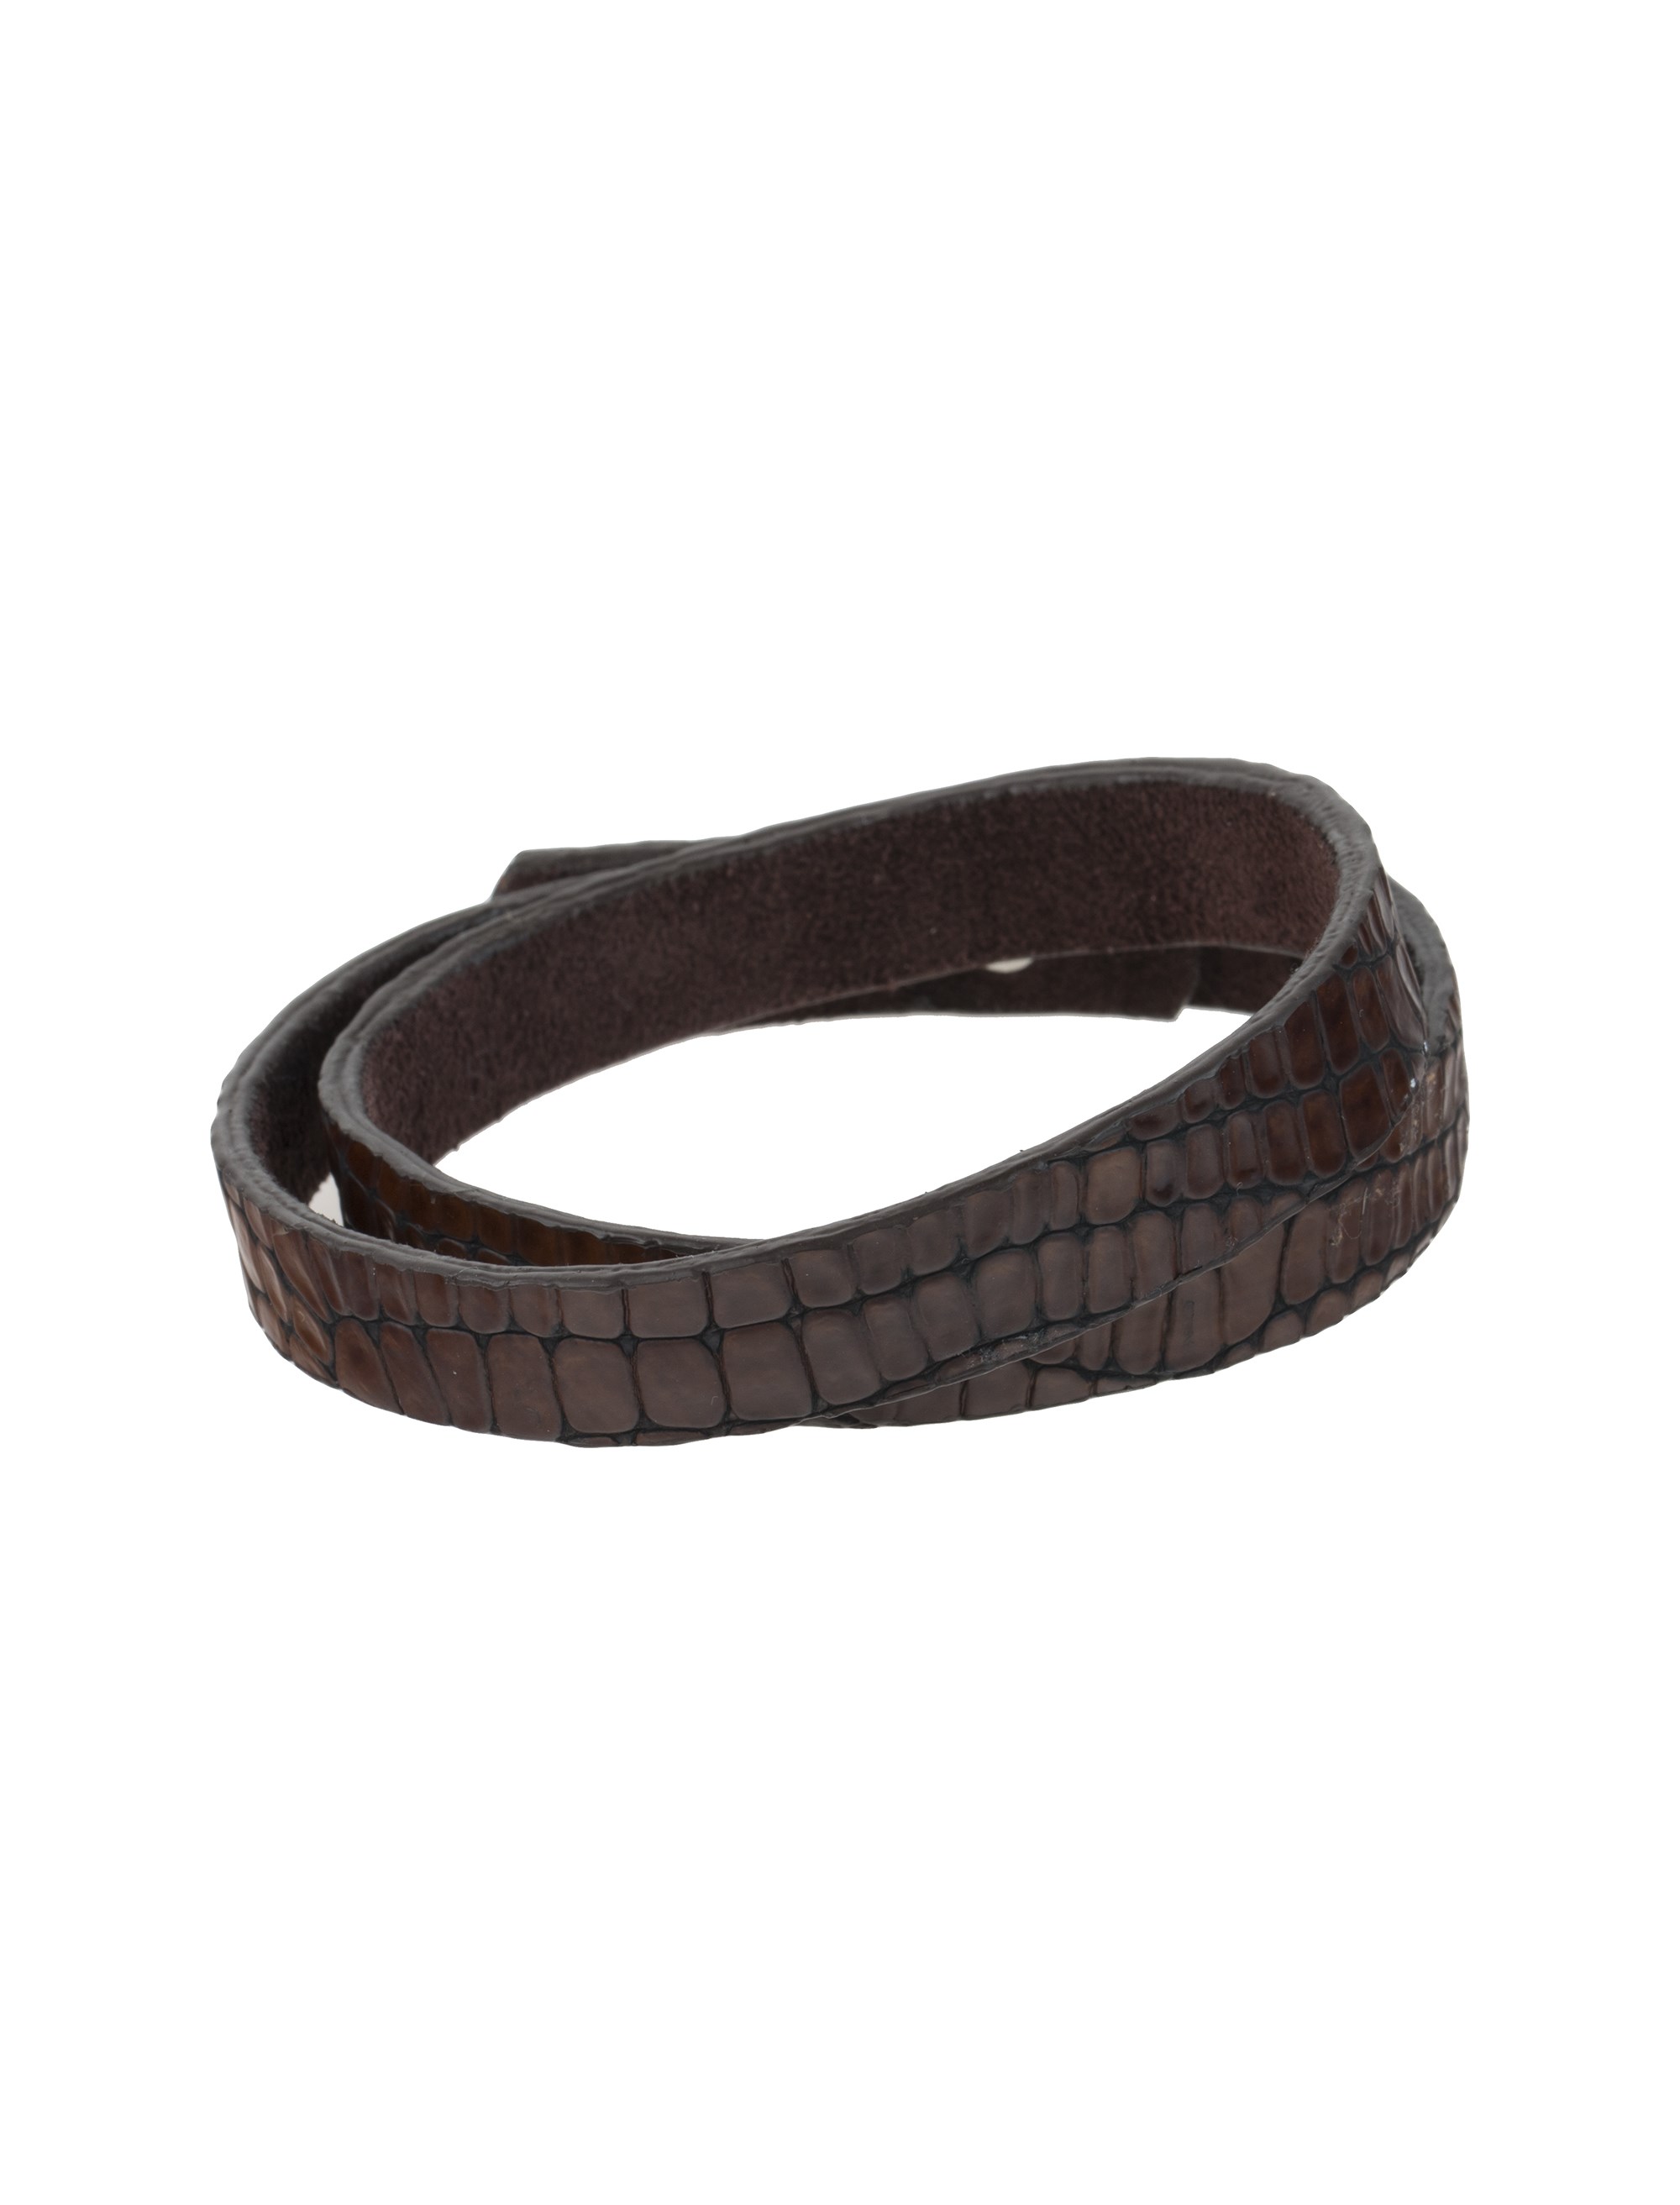 دستبند چرم مردانه - ماکو دیزاین سایز 44 cm